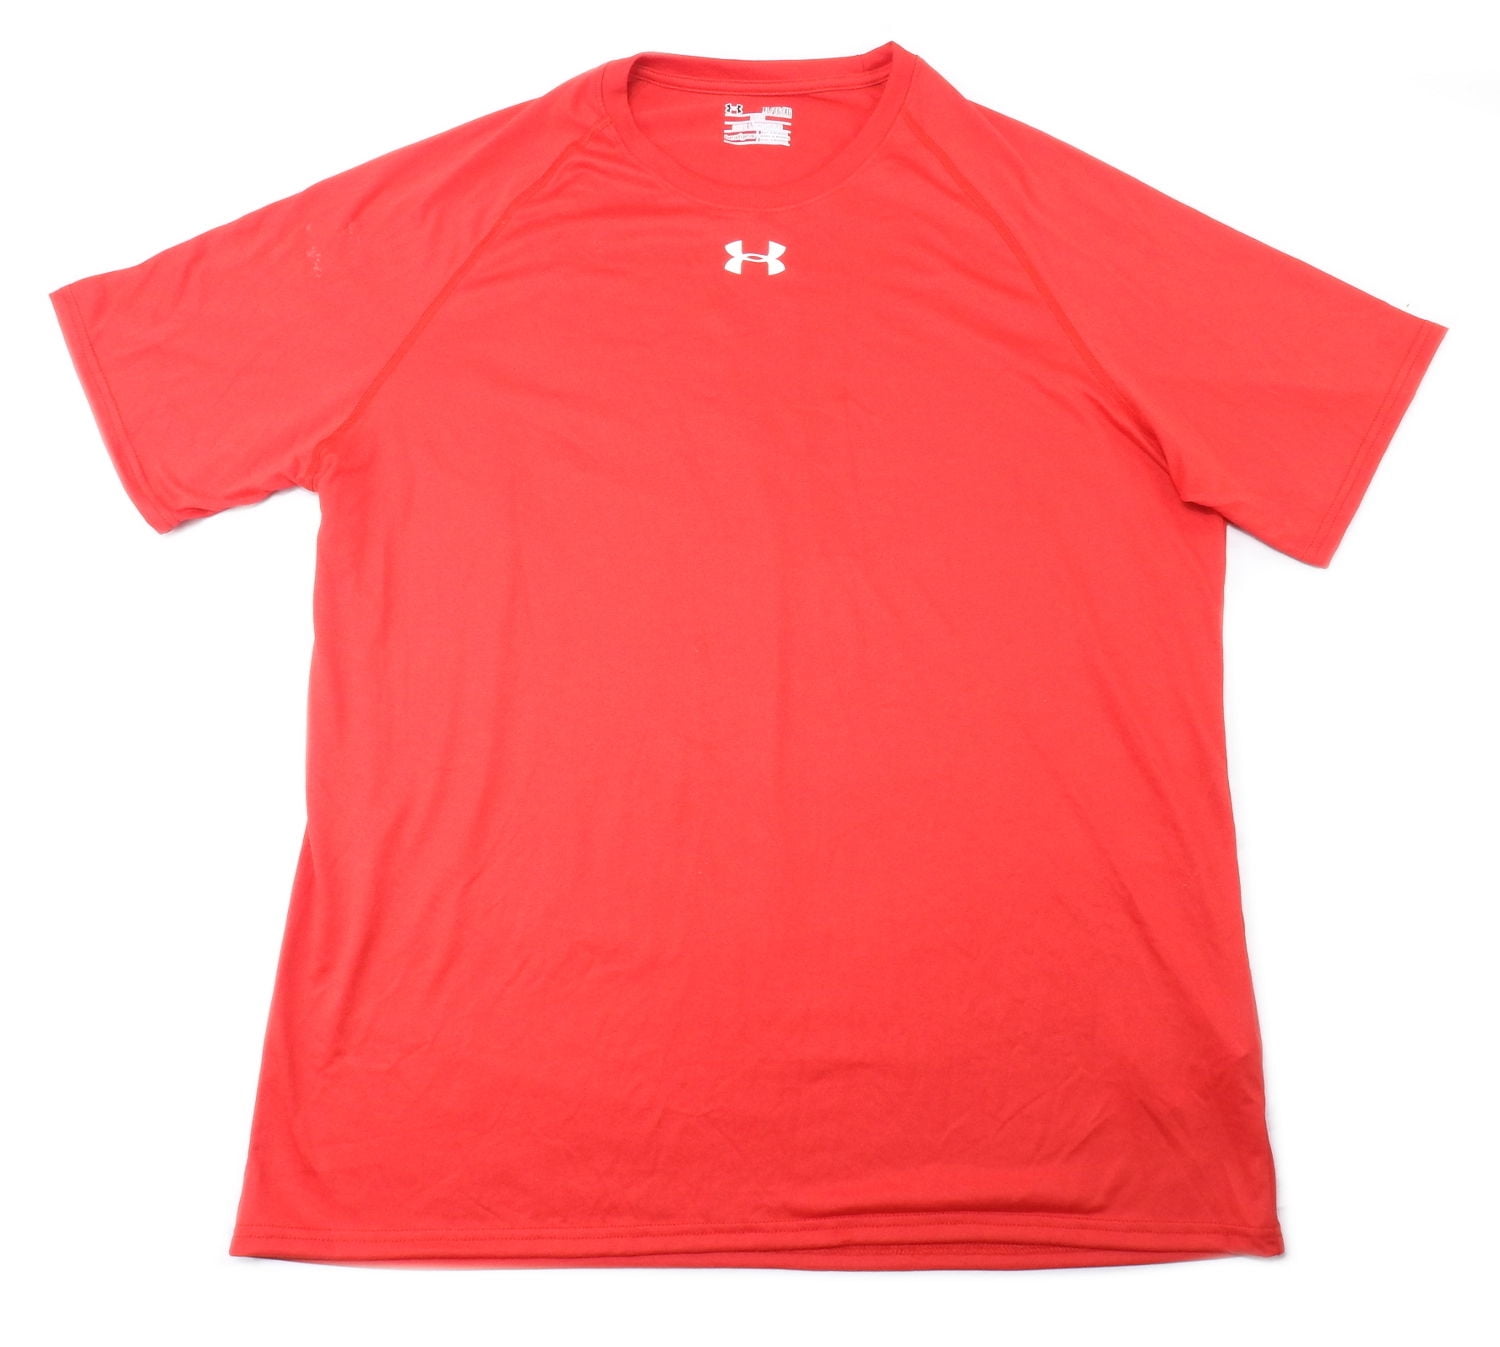 Under Armour 1262991 860 Men s Shirt Sleeve 3XL Orange Heat Gear 